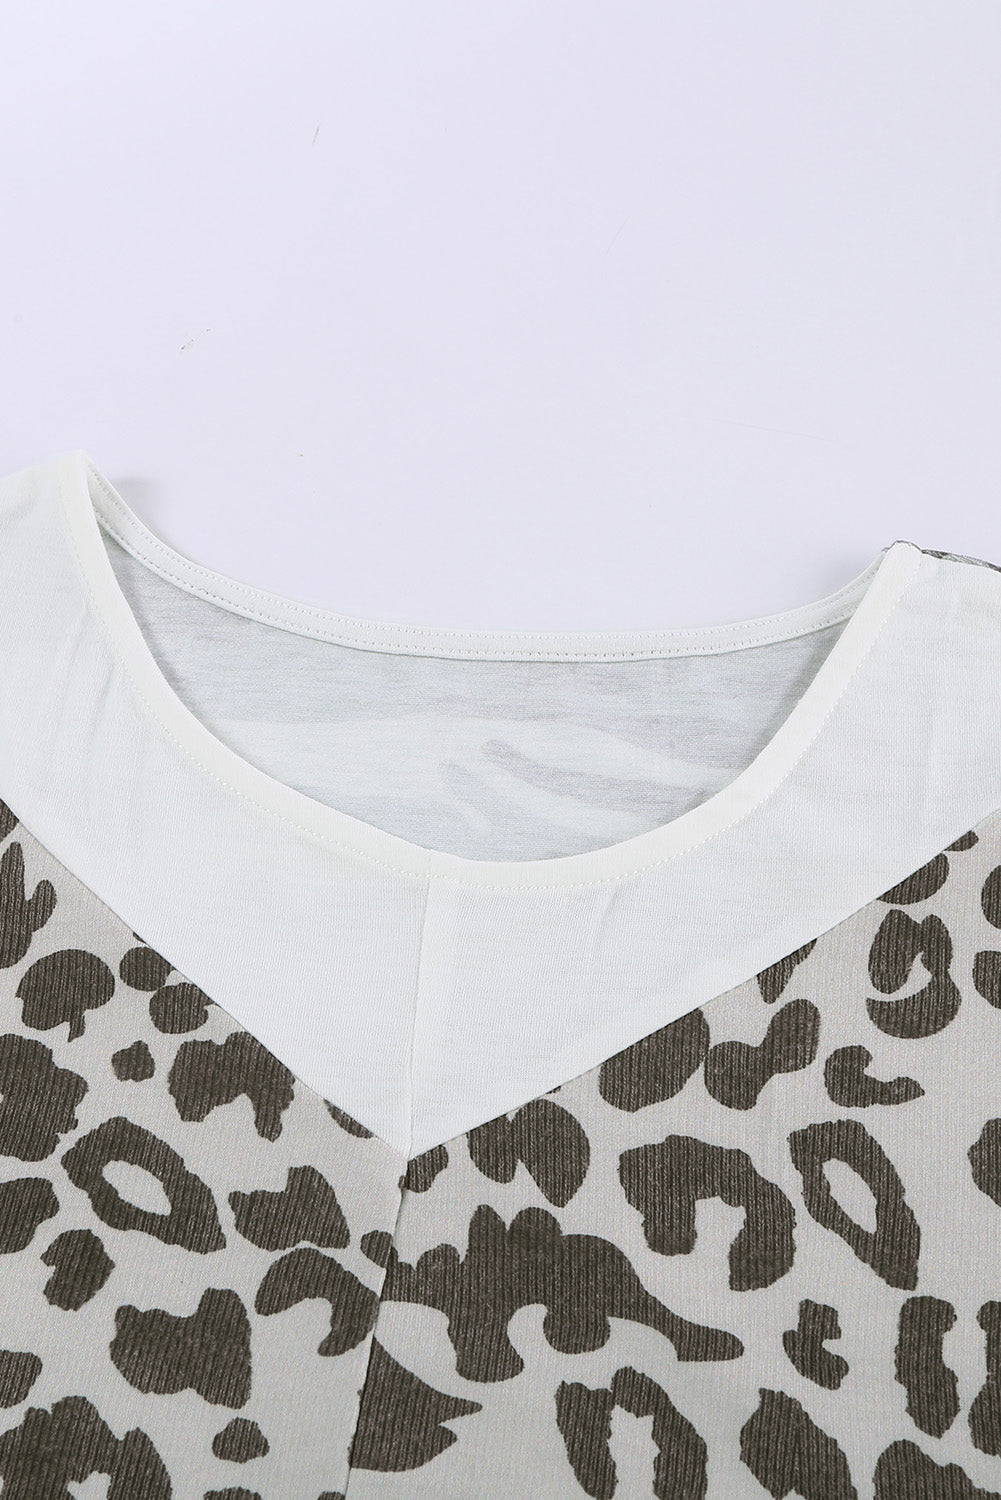 Leopard Plus Size Leopard Camo Splicing Twist Knot Half Sleeve T-Shirt